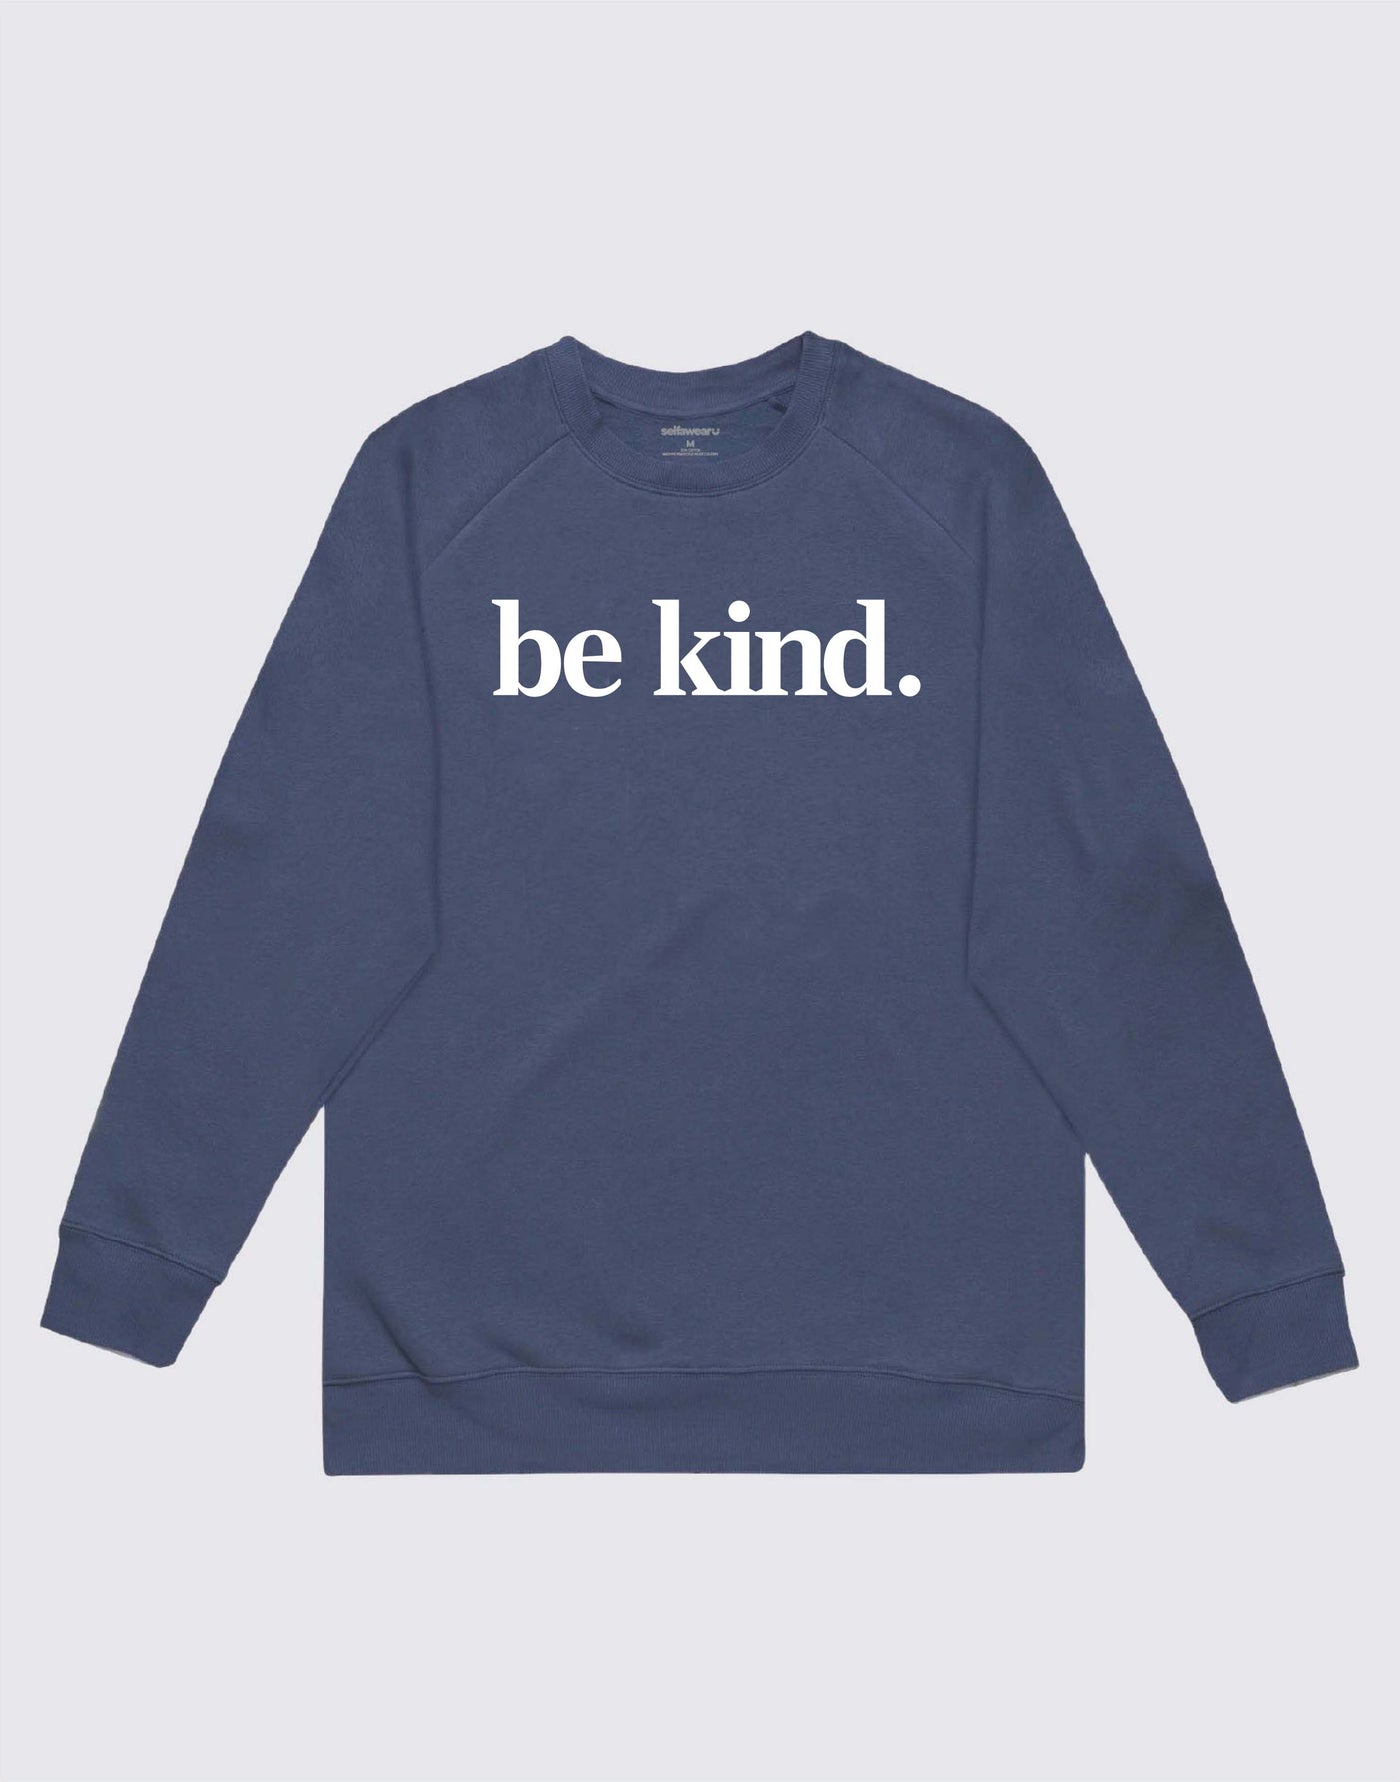 Be Kind Sweatshirt Stone Blue Sweatshirt Selfawear 